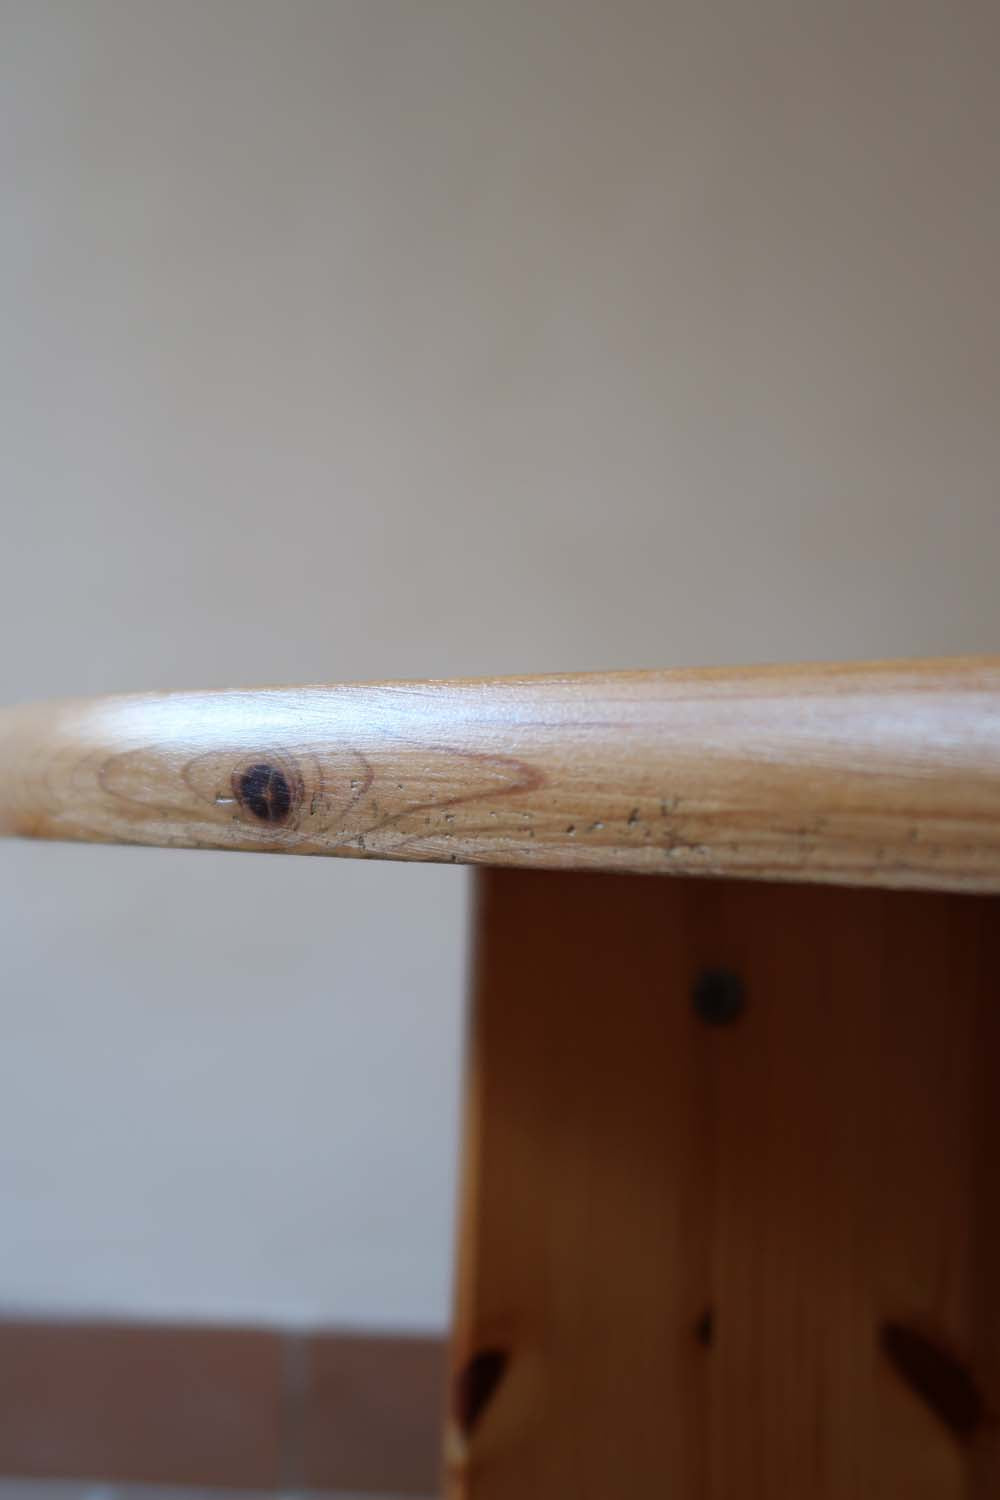 grande table basse pin brutaliste maison regain charlotte perriand vintage bois